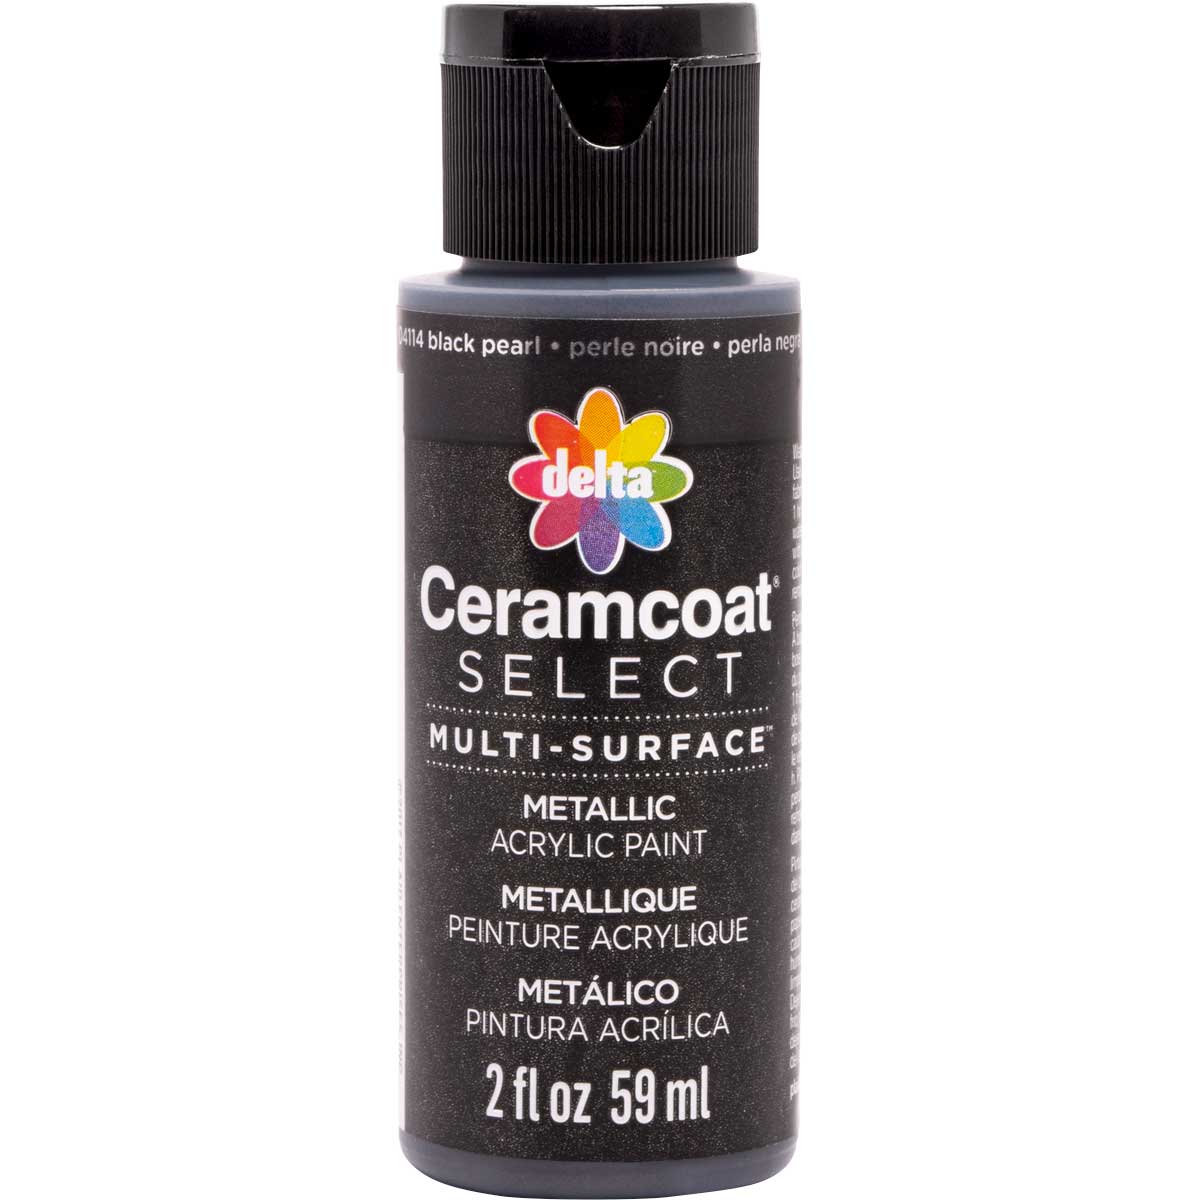 Delta Ceramcoat ® Select Multi-Surface Acrylic Paint - Metallic - Black Pearl, 2 oz. - 04114